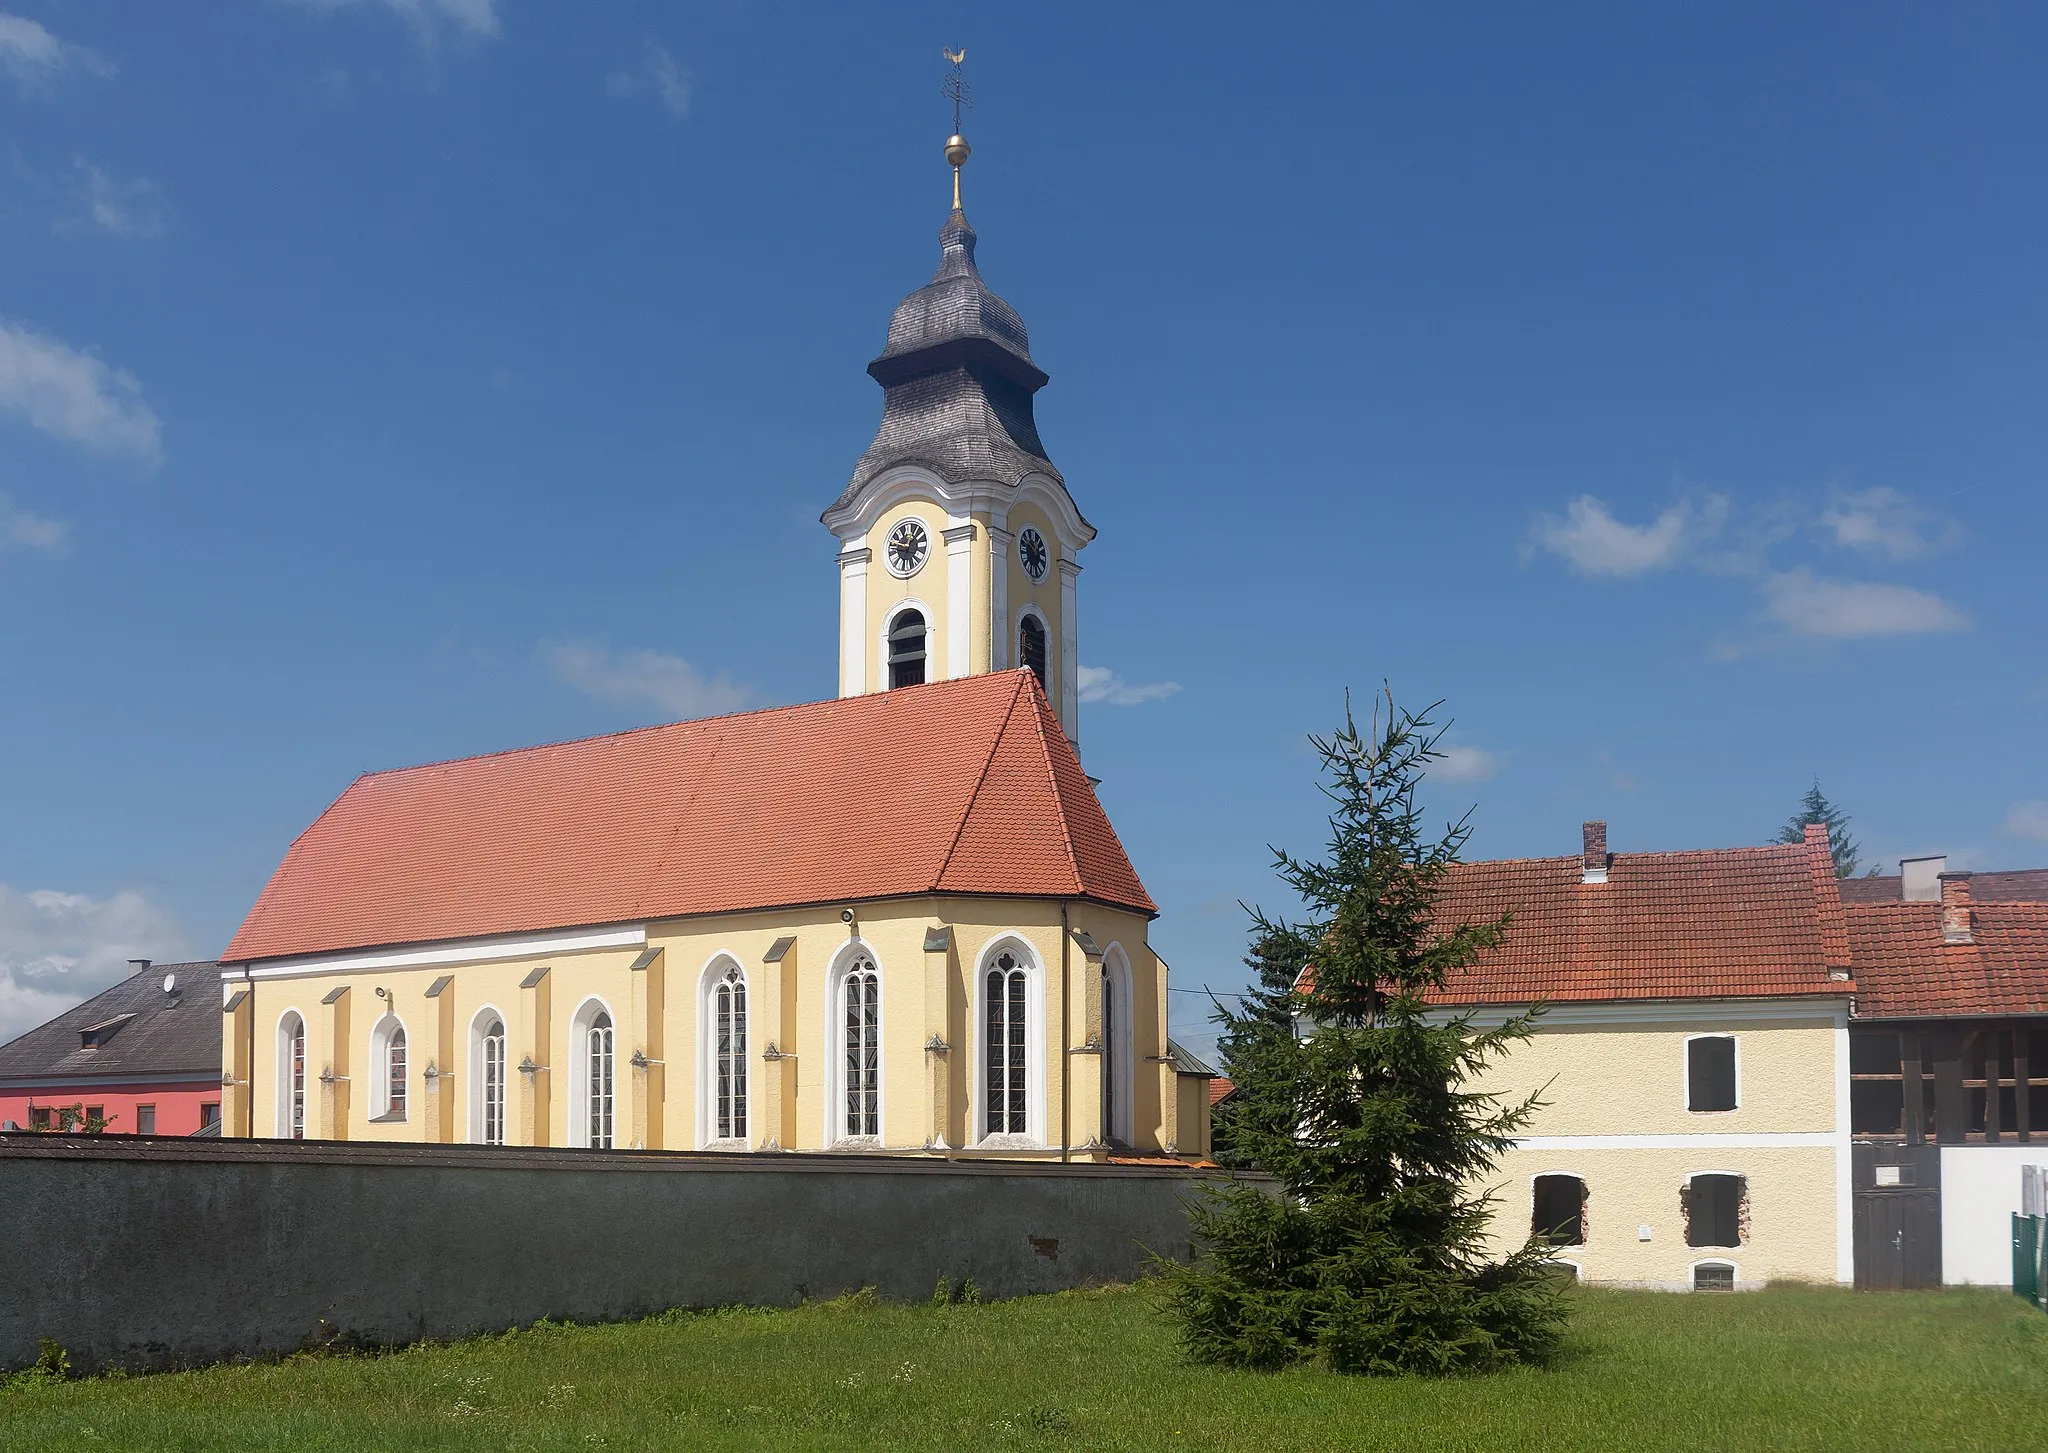 Photo showing: Ort im Innkreis, church: Katholische Pfarrkirche heilige Apostel Andreas